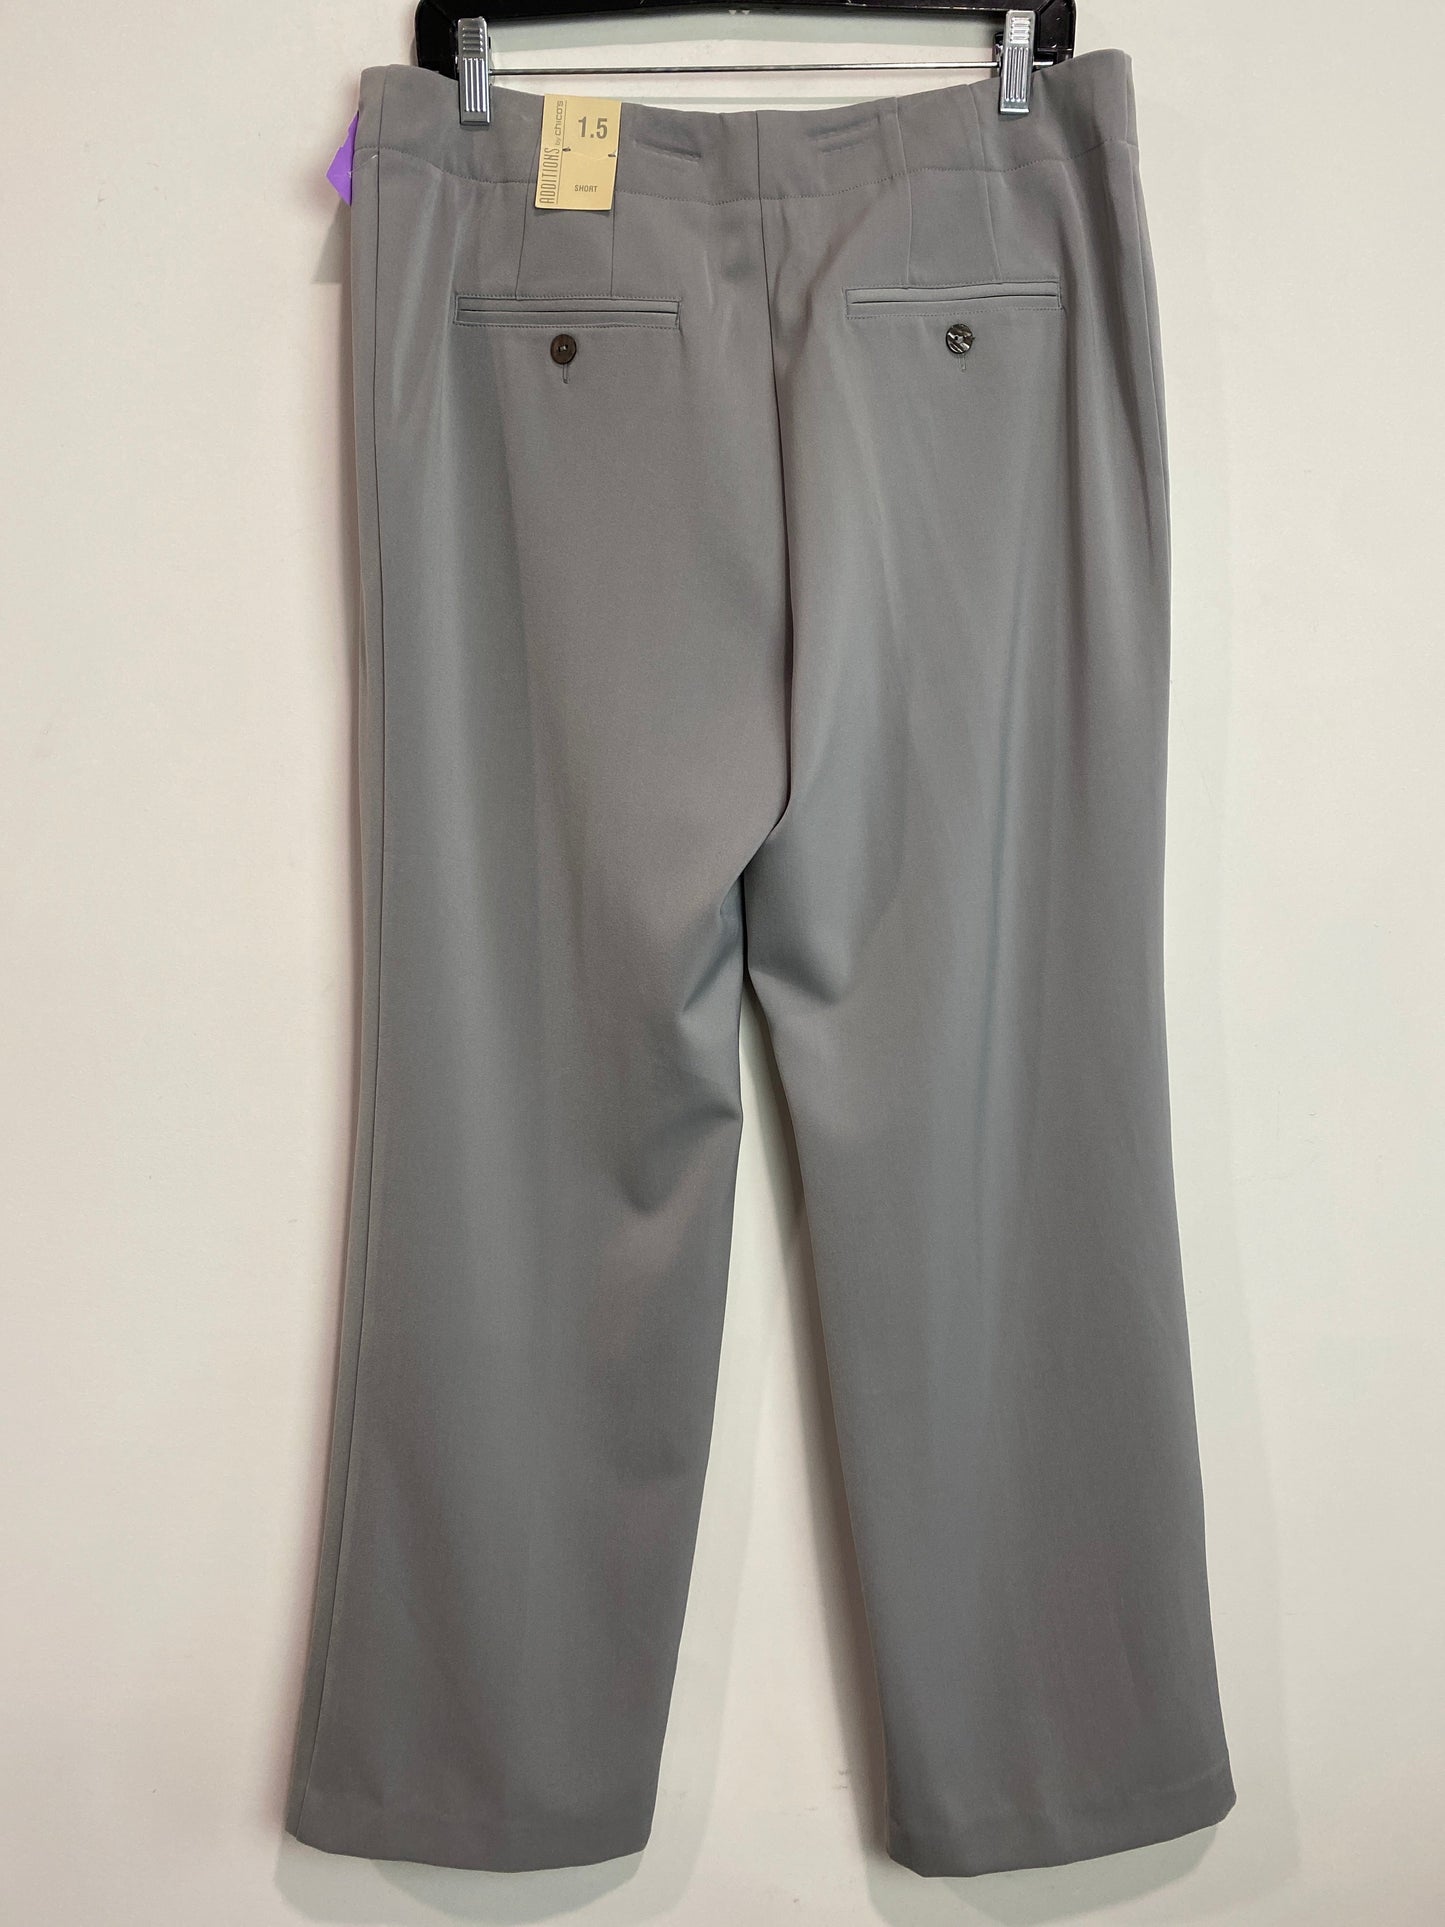 Grey Pants Dress Chicos, Size 8